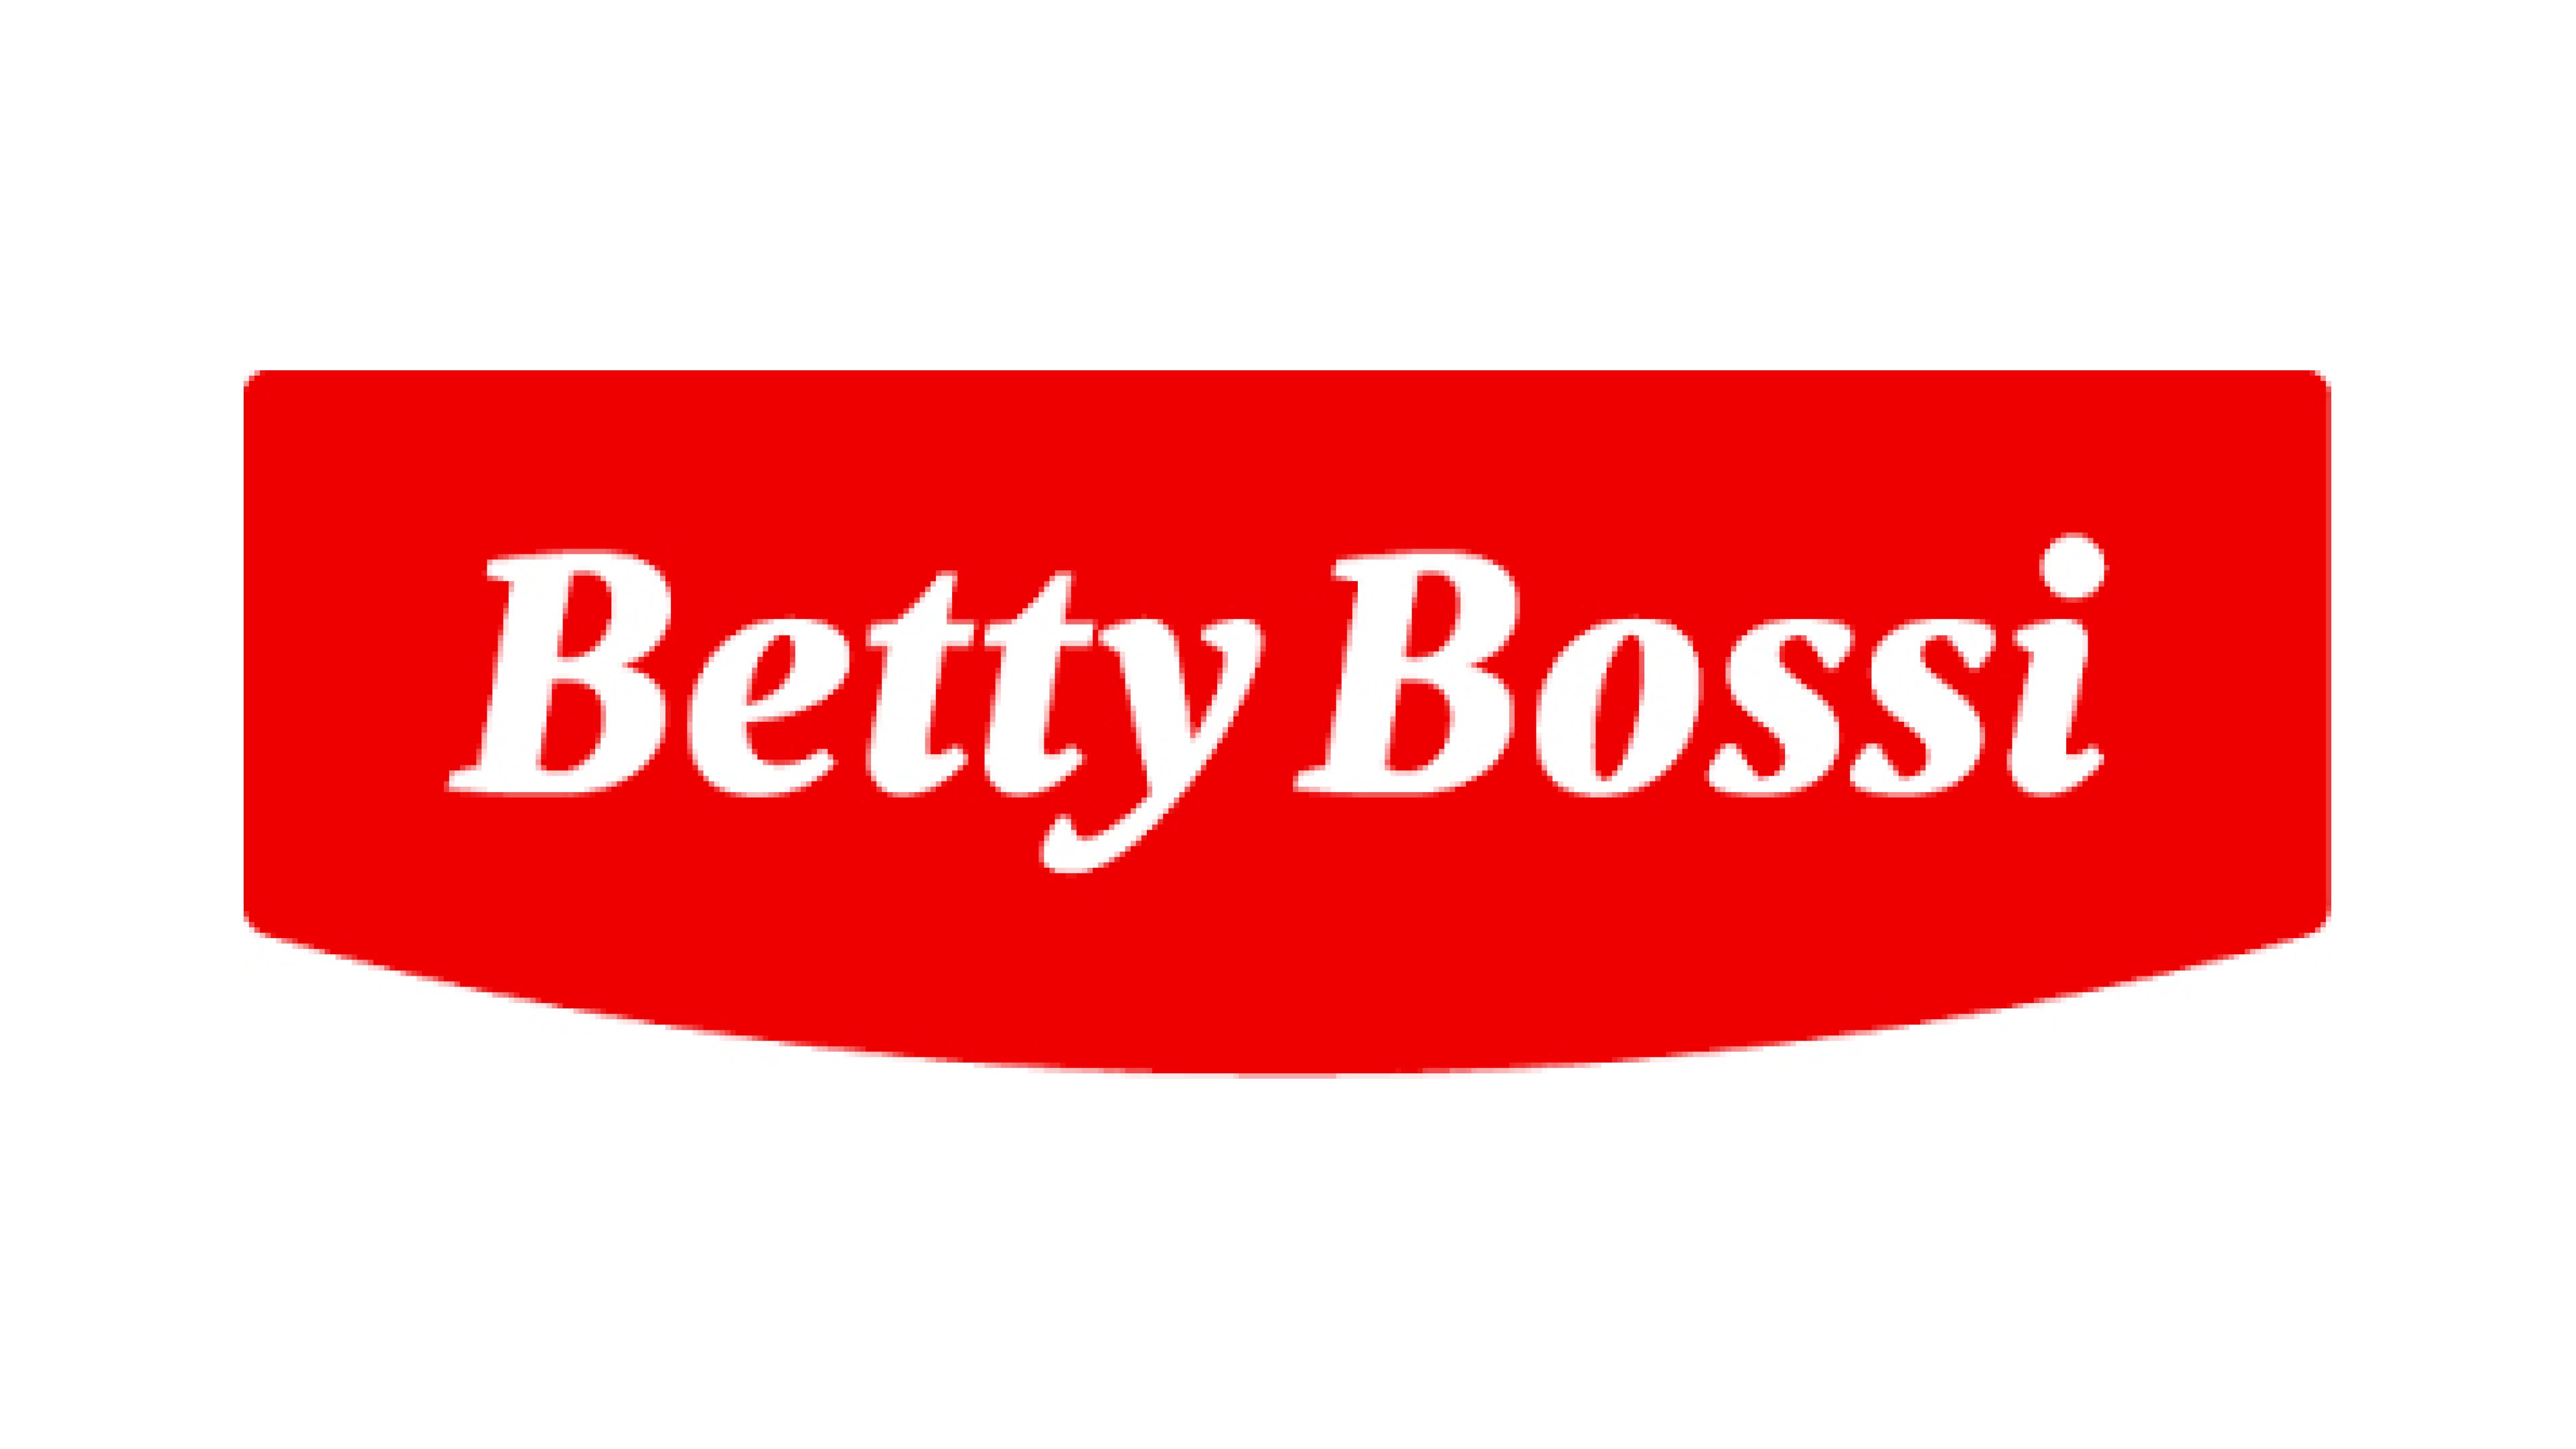 Betty Bossi Logo